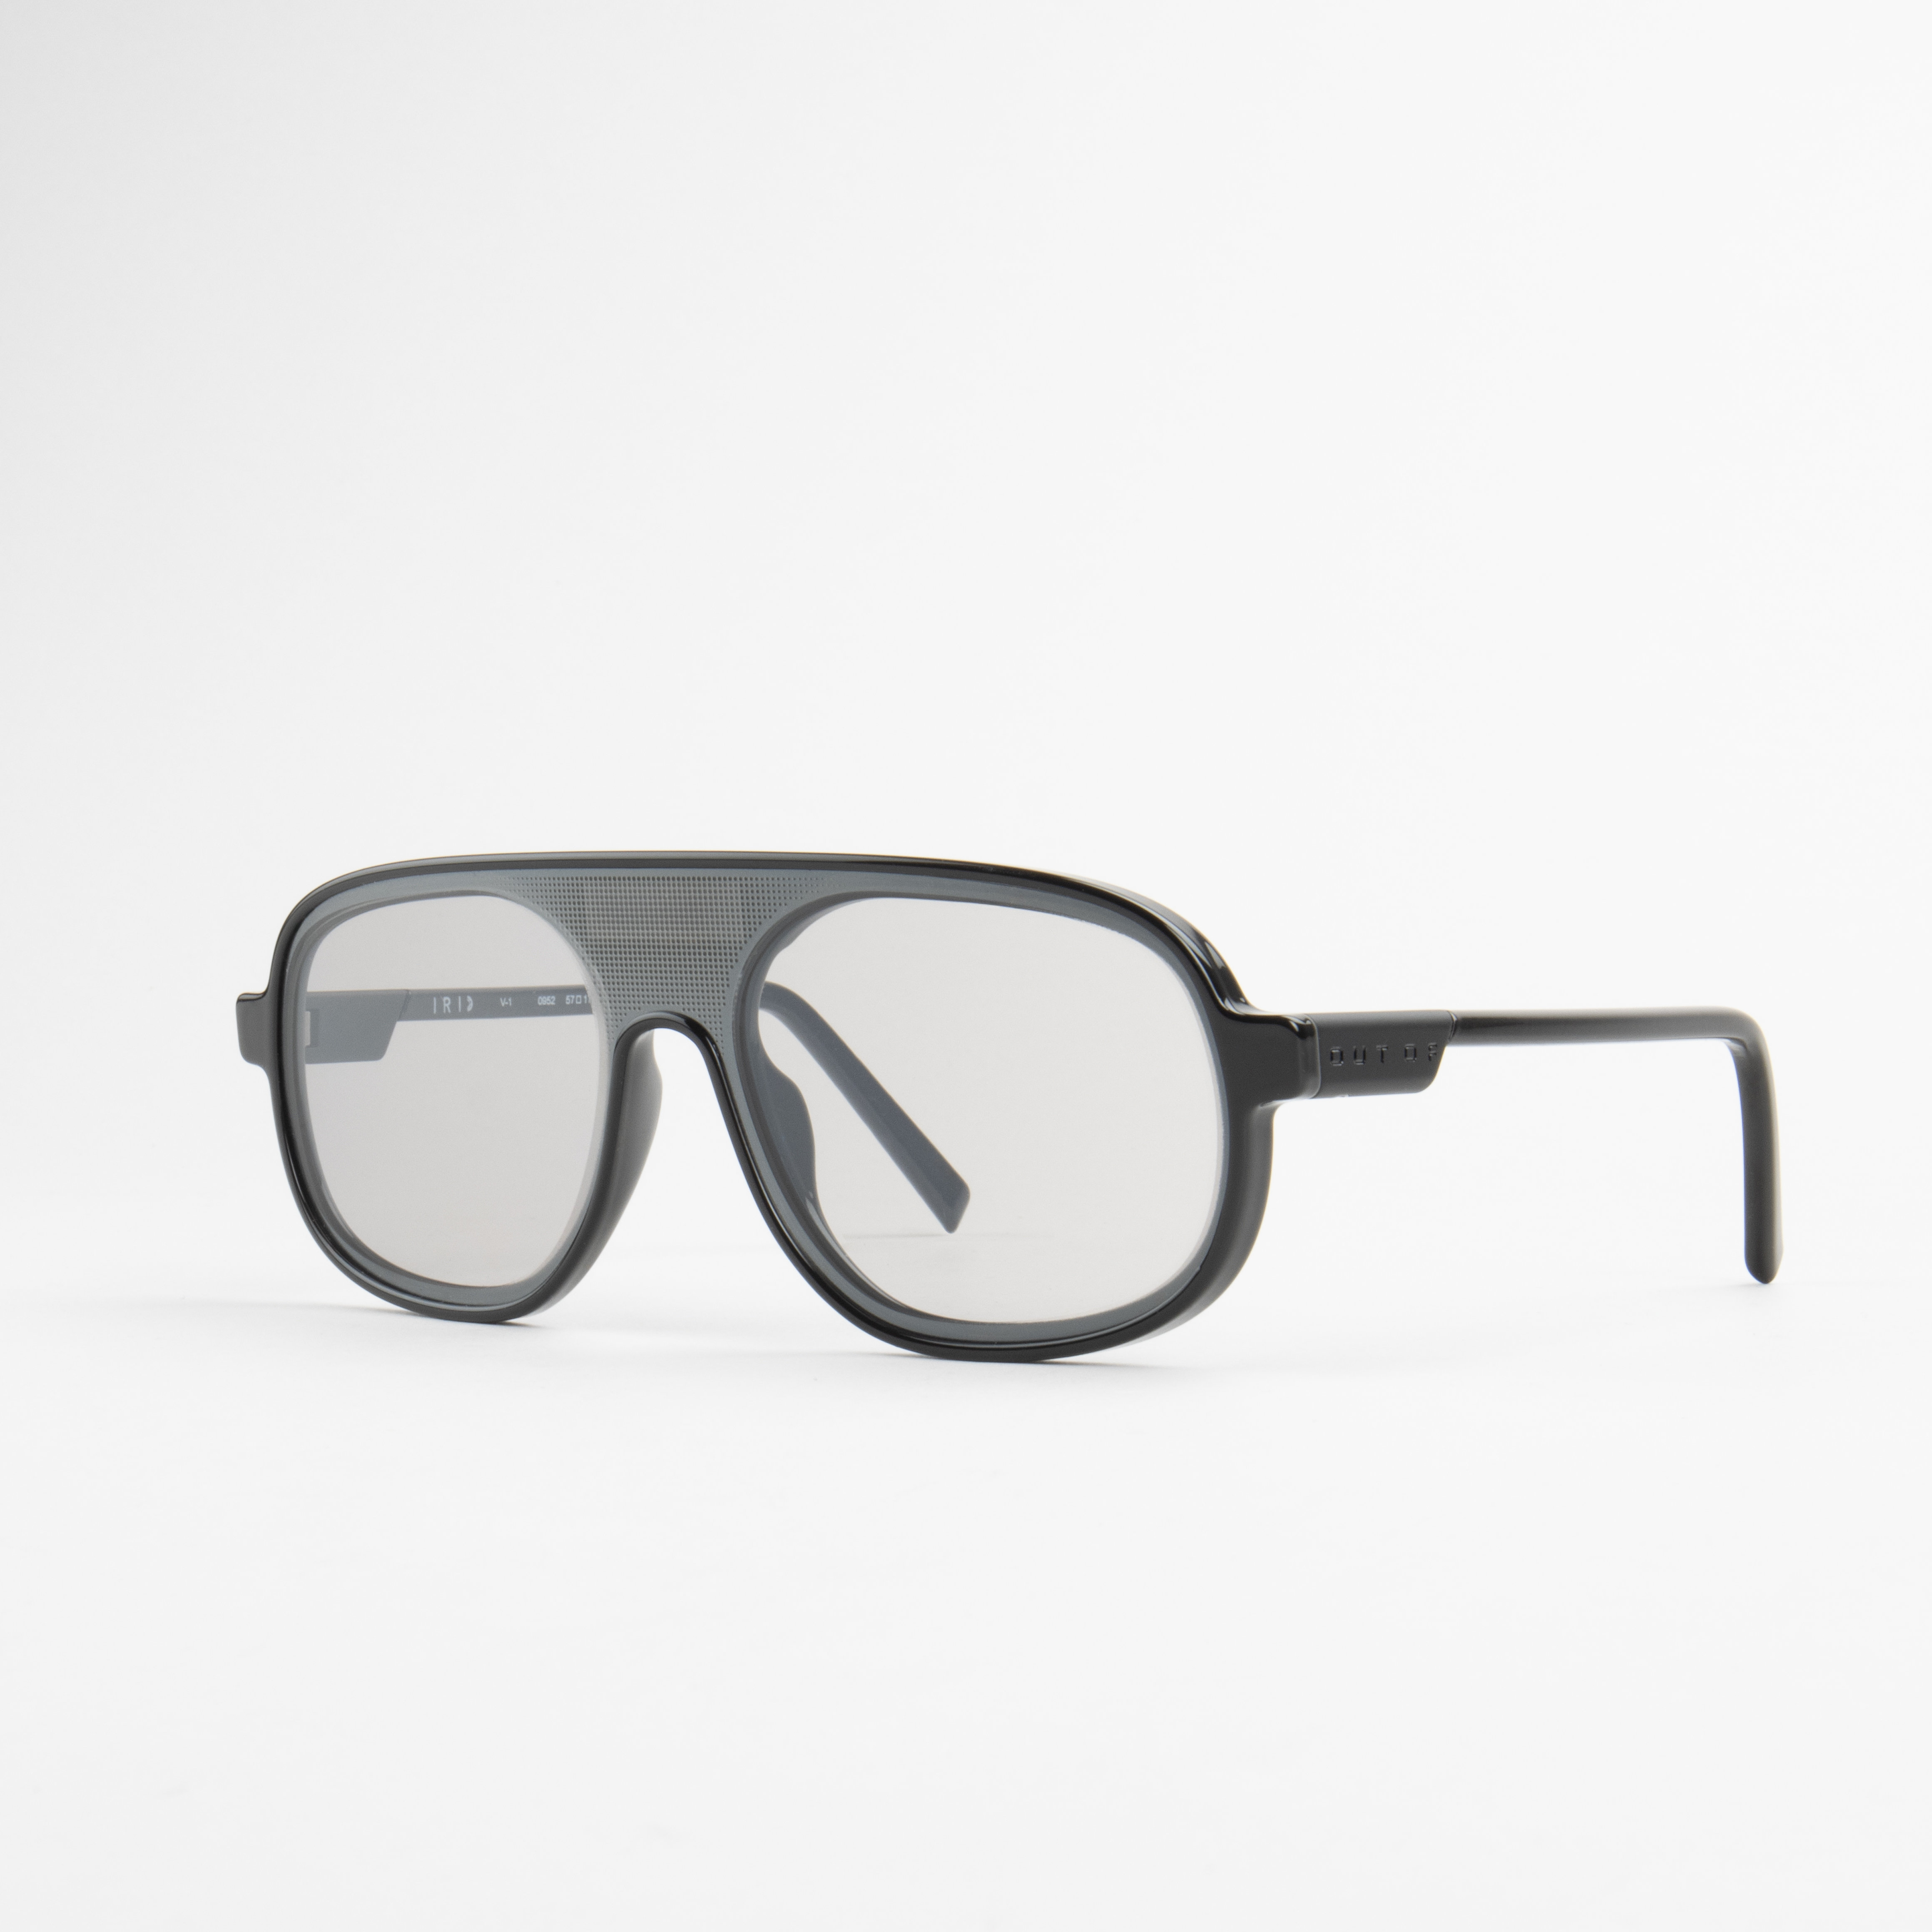 V-1 sunglasses with IRID X-10 lens color: Glossy black/black